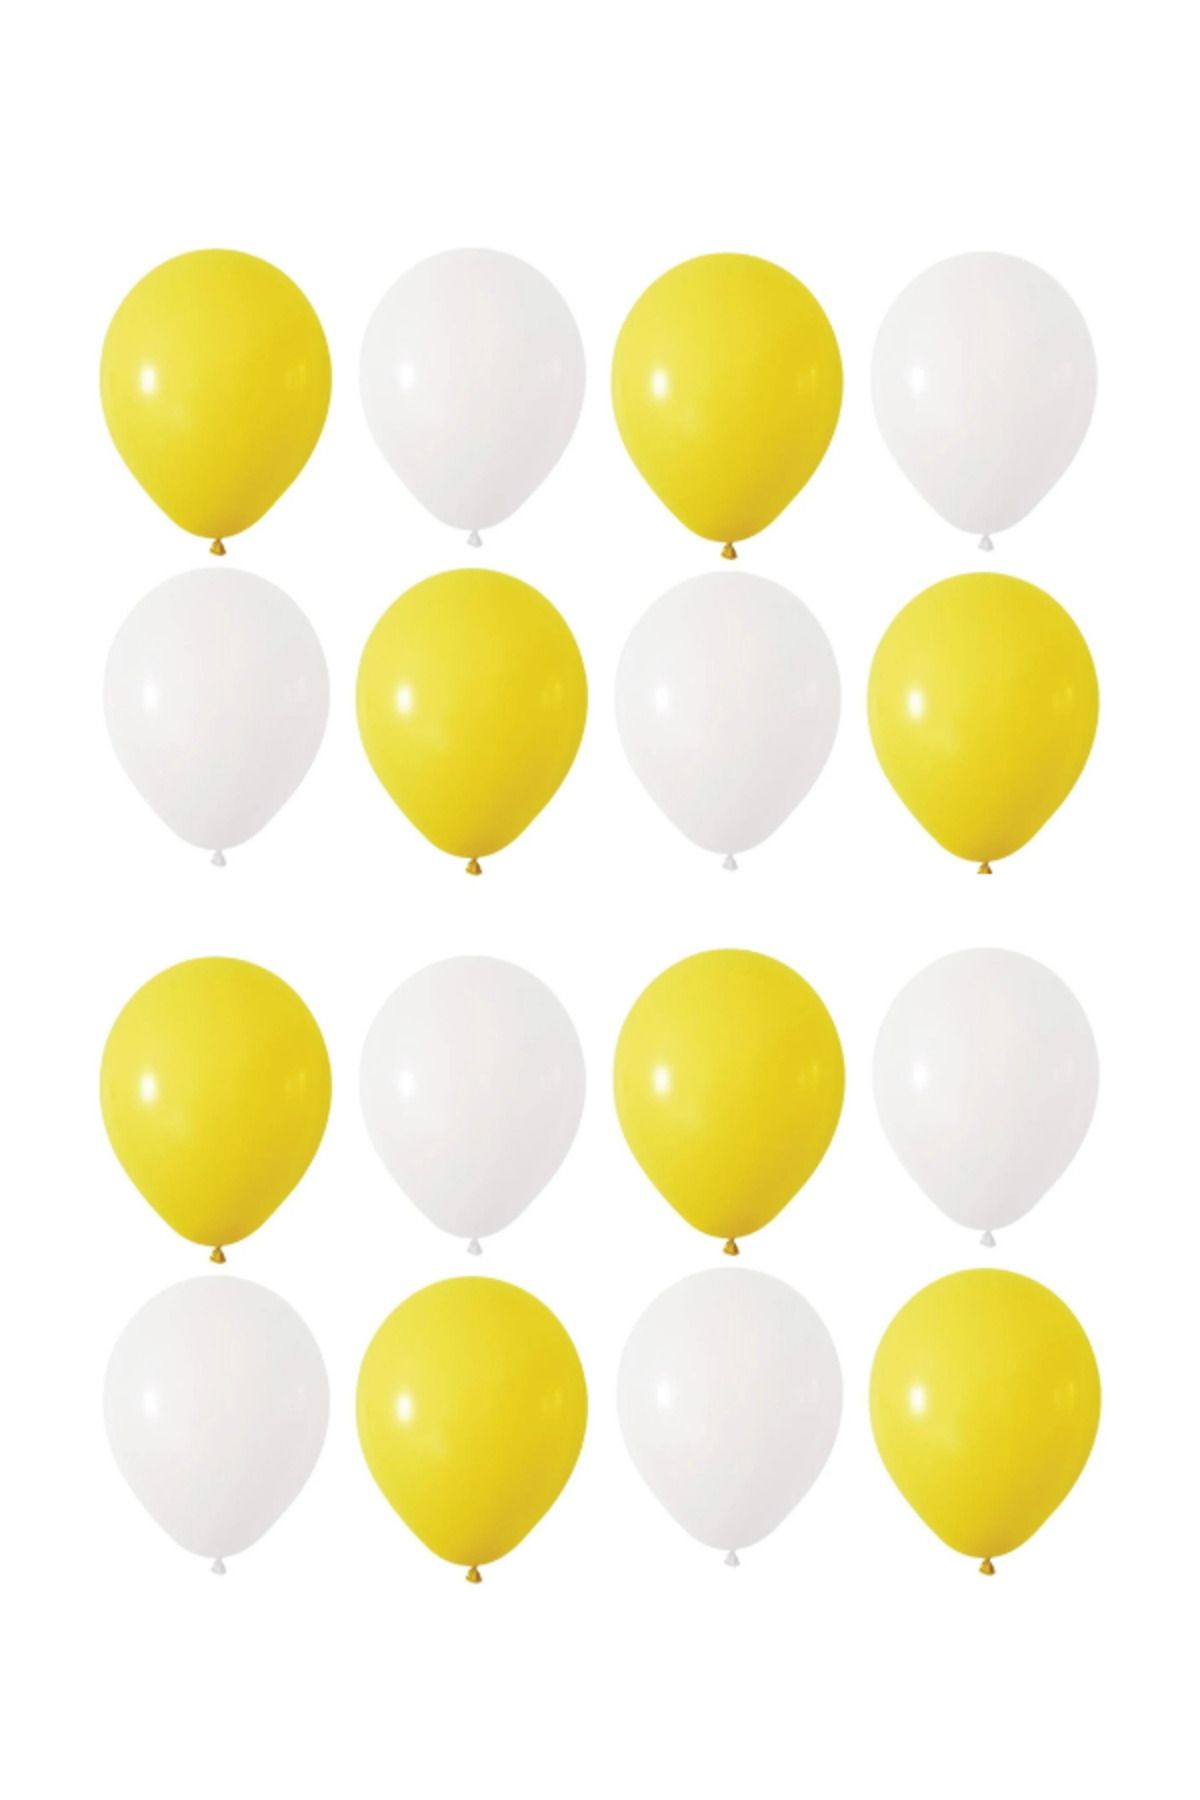 mypartyready Sarı Beyaz Pastel Ton Karışık Renk Balon 12" 10 Adet Papatya Konsept Parti Süsleme Balonu